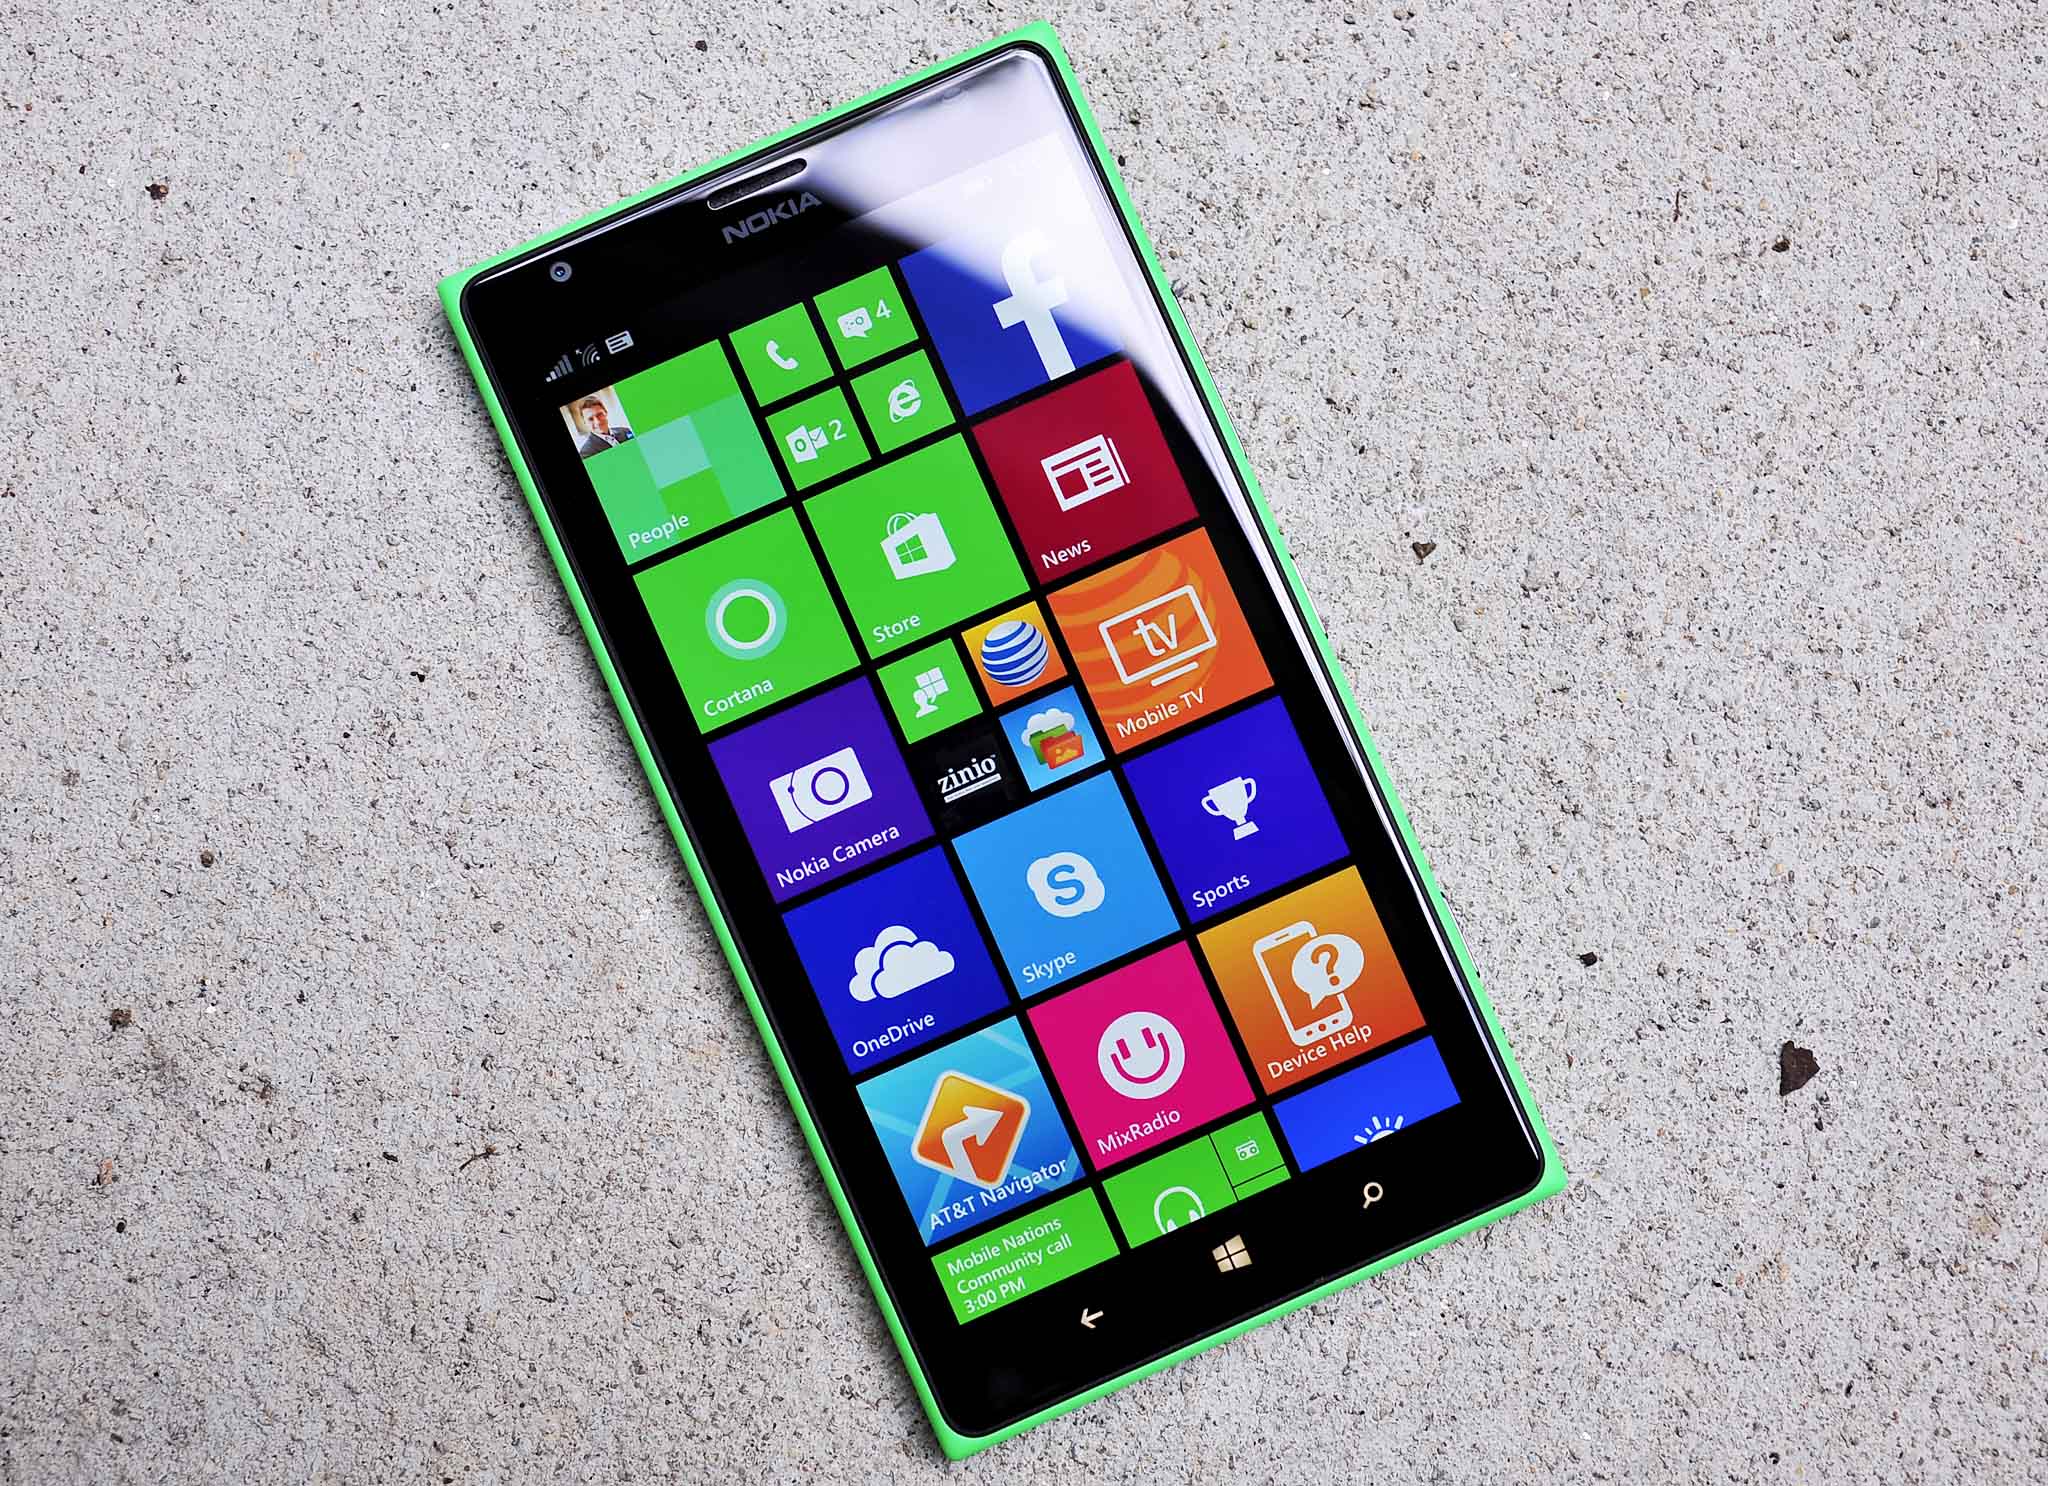 Lumia_1520_green_pavement_display.jpg